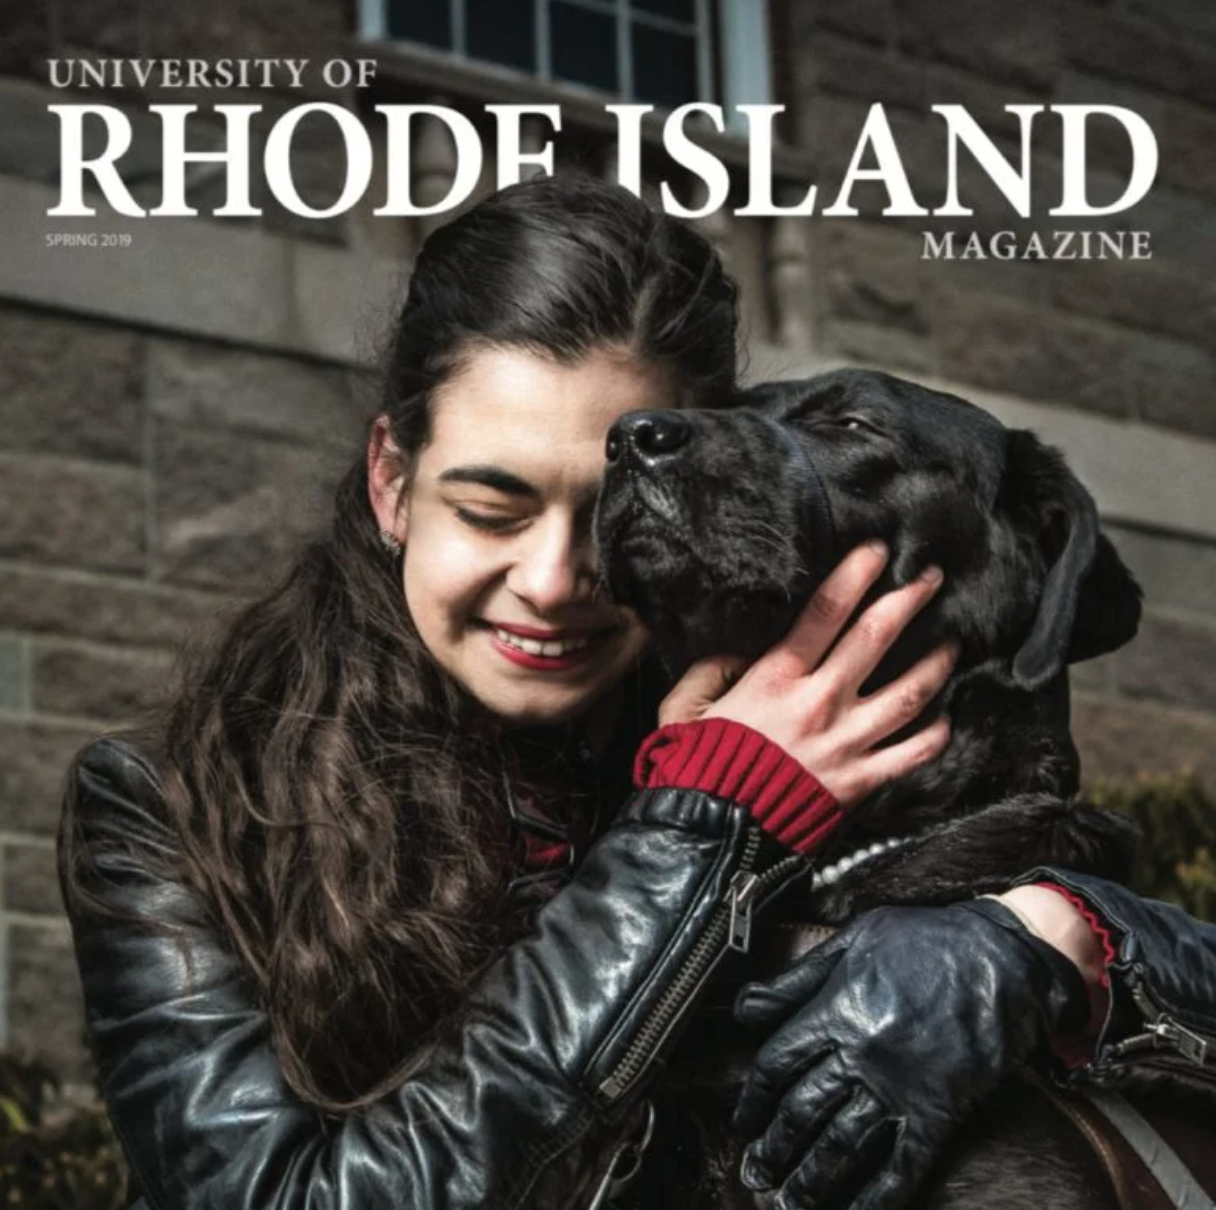 University of Rhode Island Magazine Spring 2019 Aria Mia Loberti and her guide dog, Ingrid